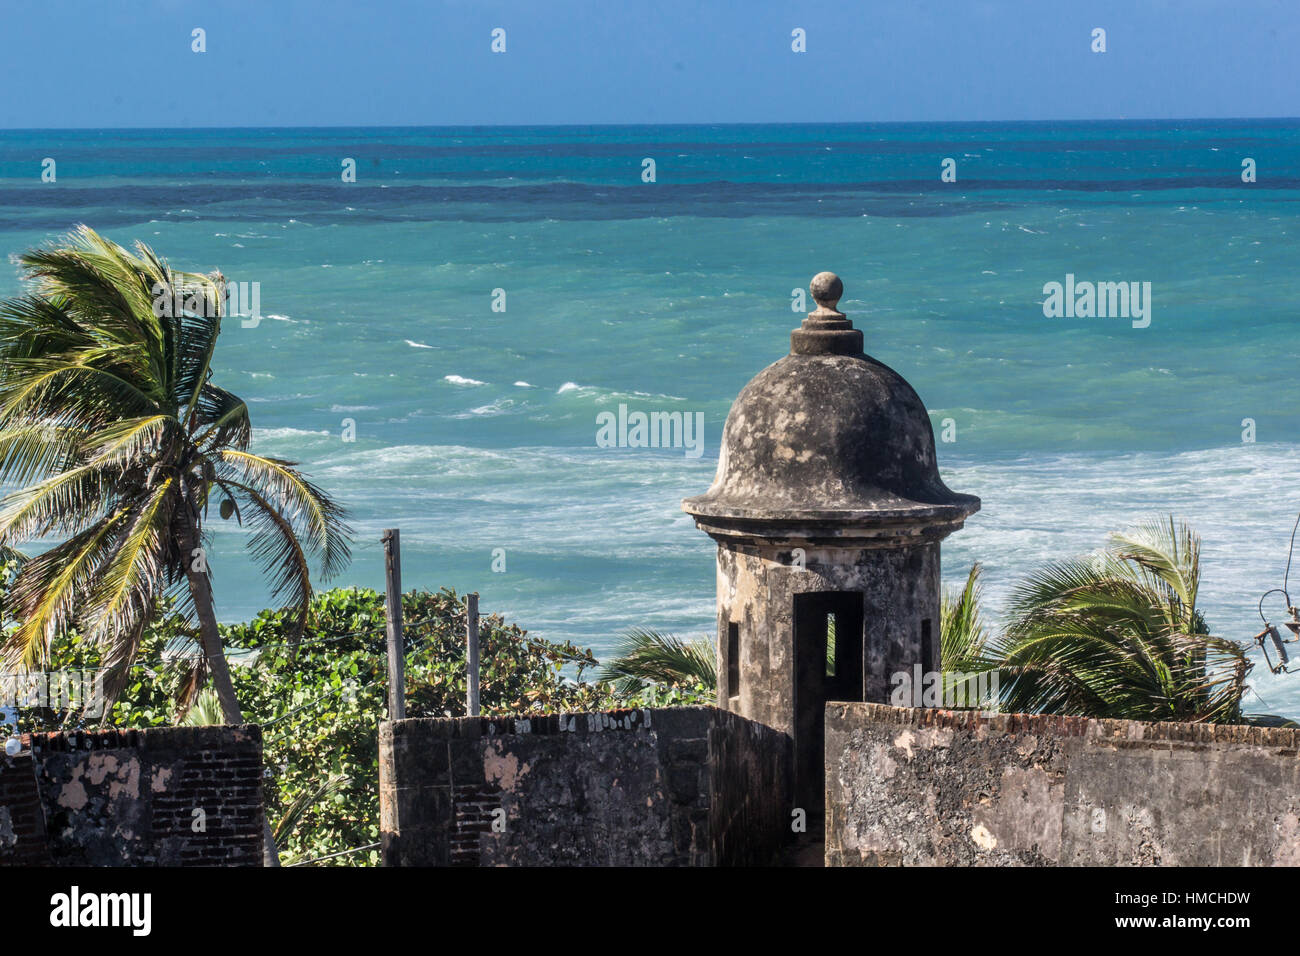 Spanische Garita mit Blick auf den Atlantischen Ozean, San Juan, Puerto Rico. Stockfoto